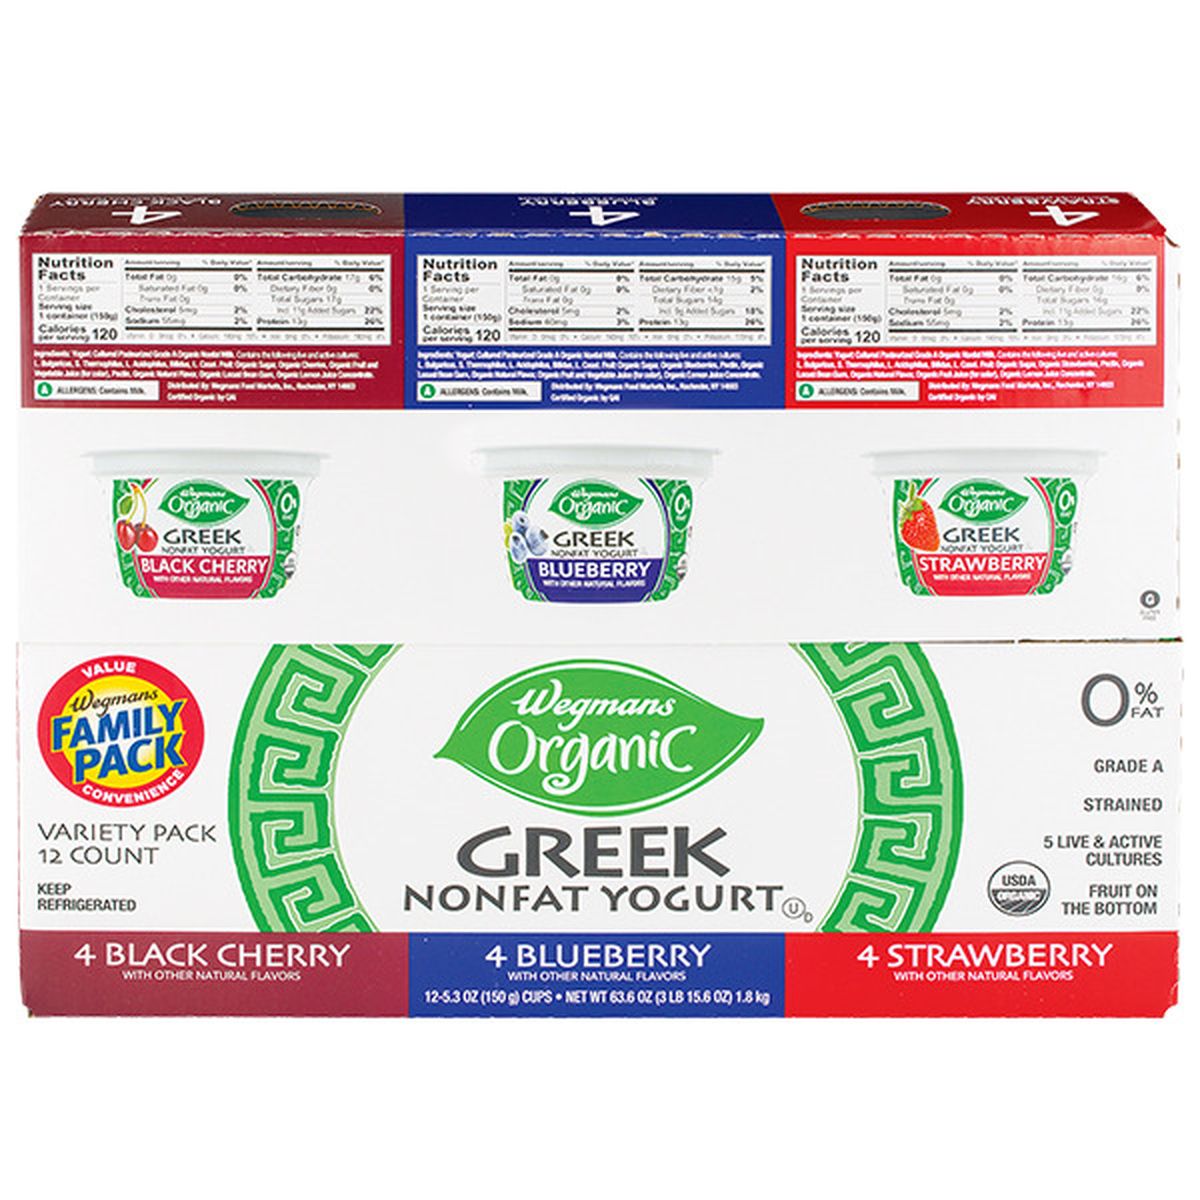 Calories in Wegmans Organic Greek Nonfat Yogurt Variety Pack, FAMILY PACK